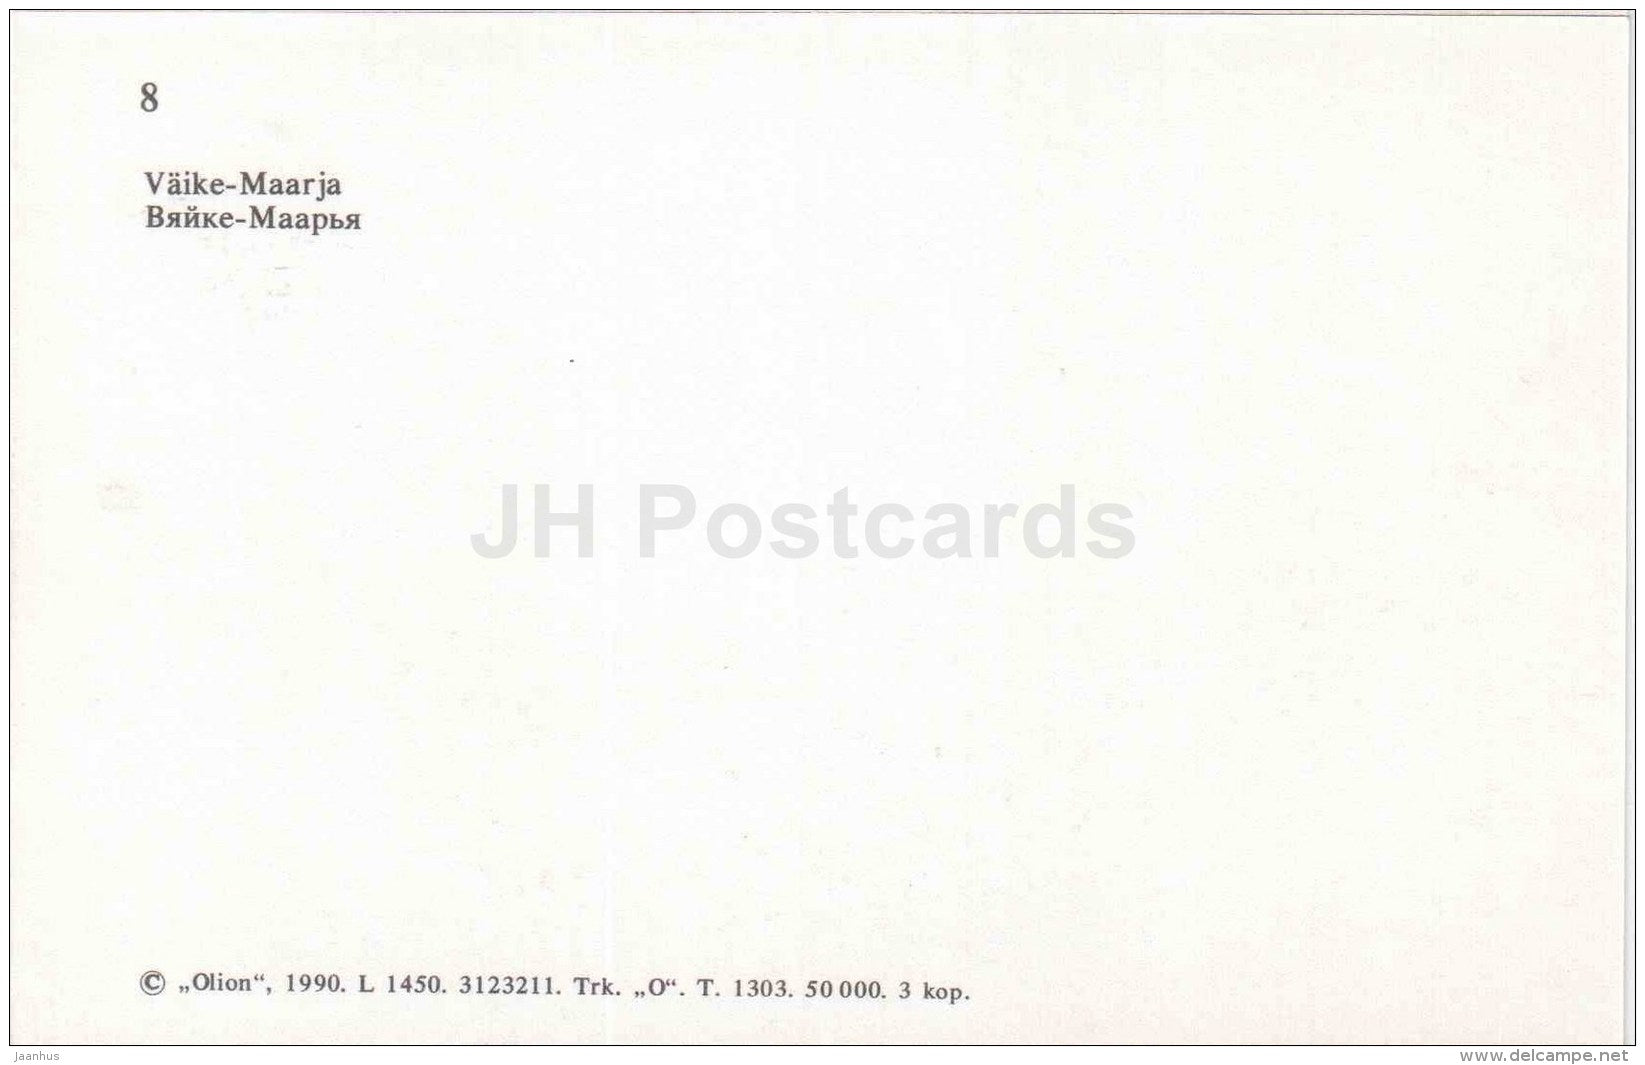 general view - Väike-Maarja - Virumaa - OLD POSTCARD REPRODUCTION! - 1990 - Estonia USSR - unused - JH Postcards